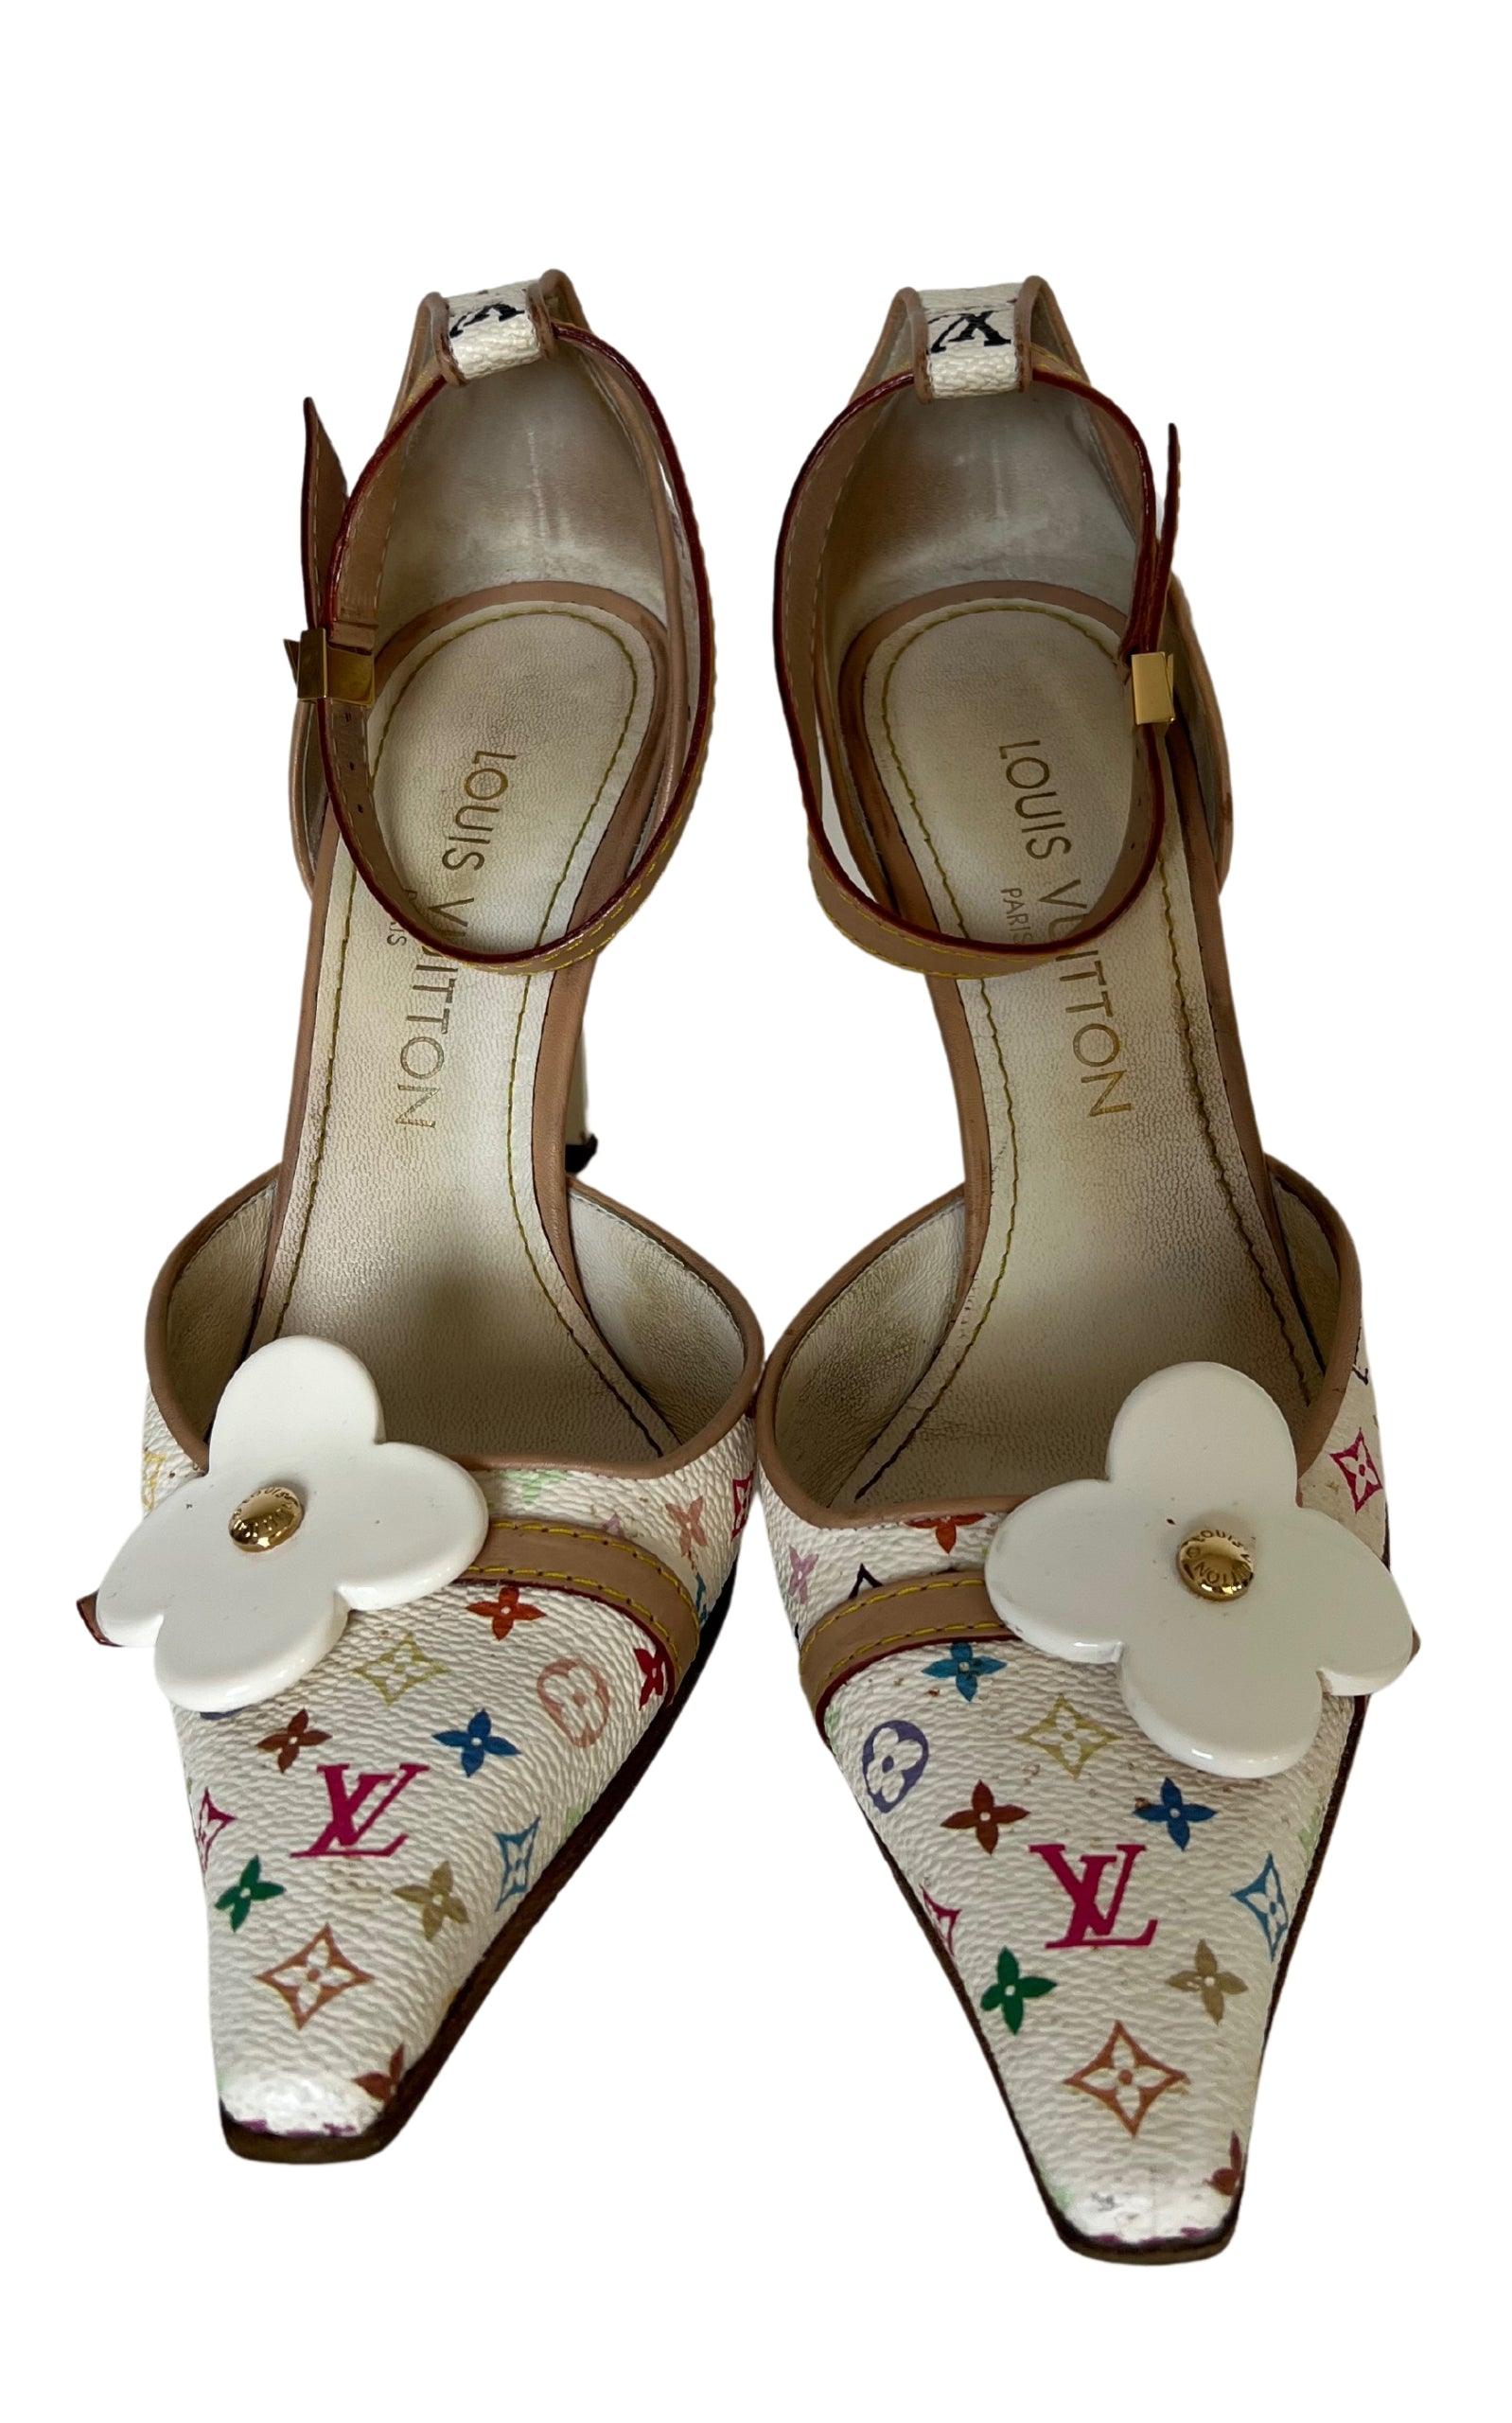 Louis Vuitton white multicolored heels (authentic)